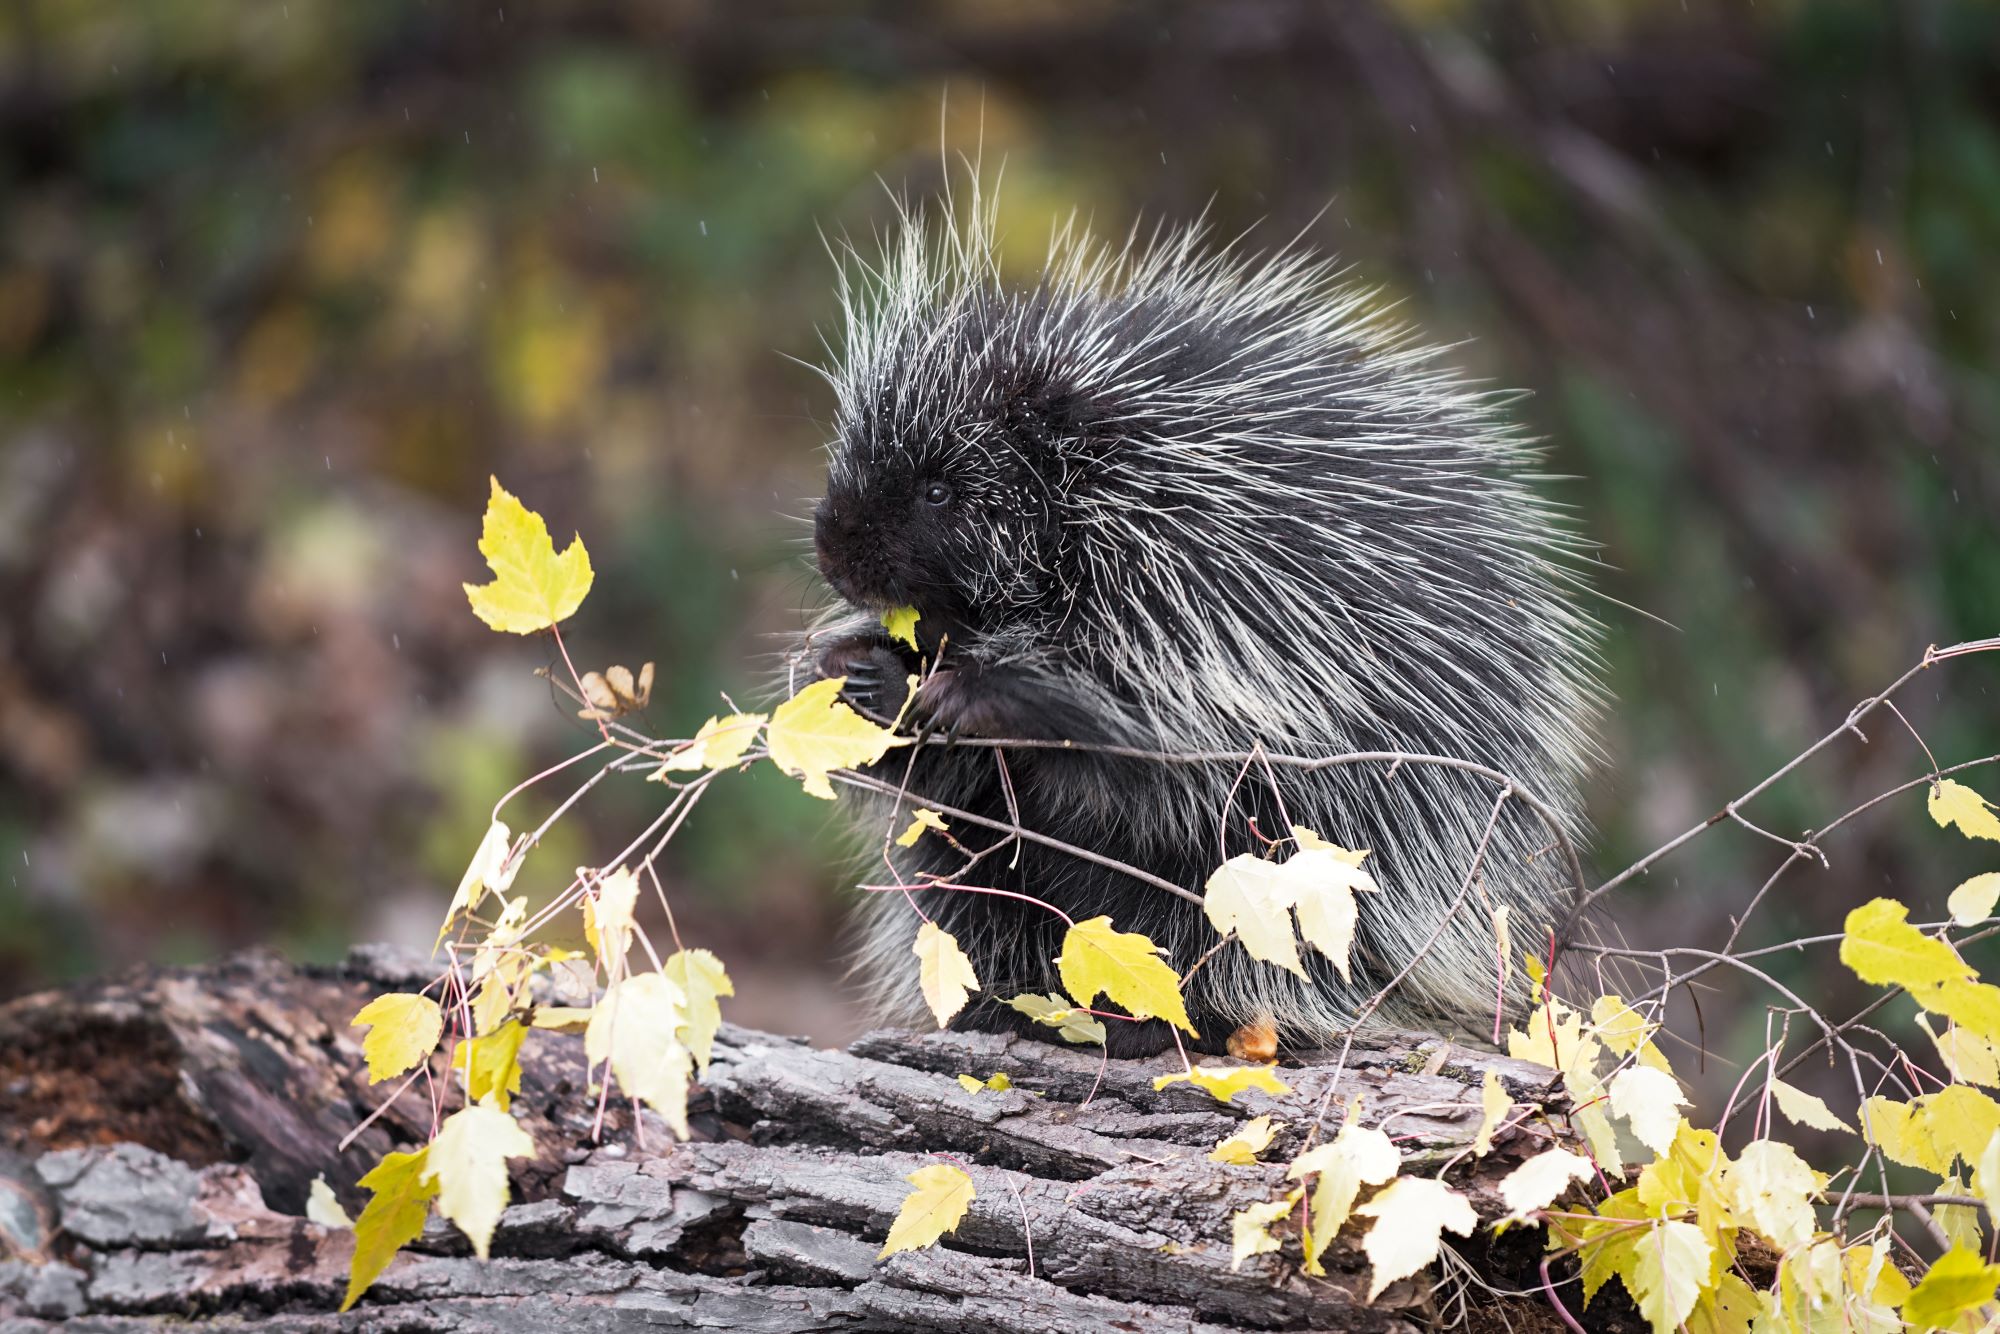 A North American porcupine.